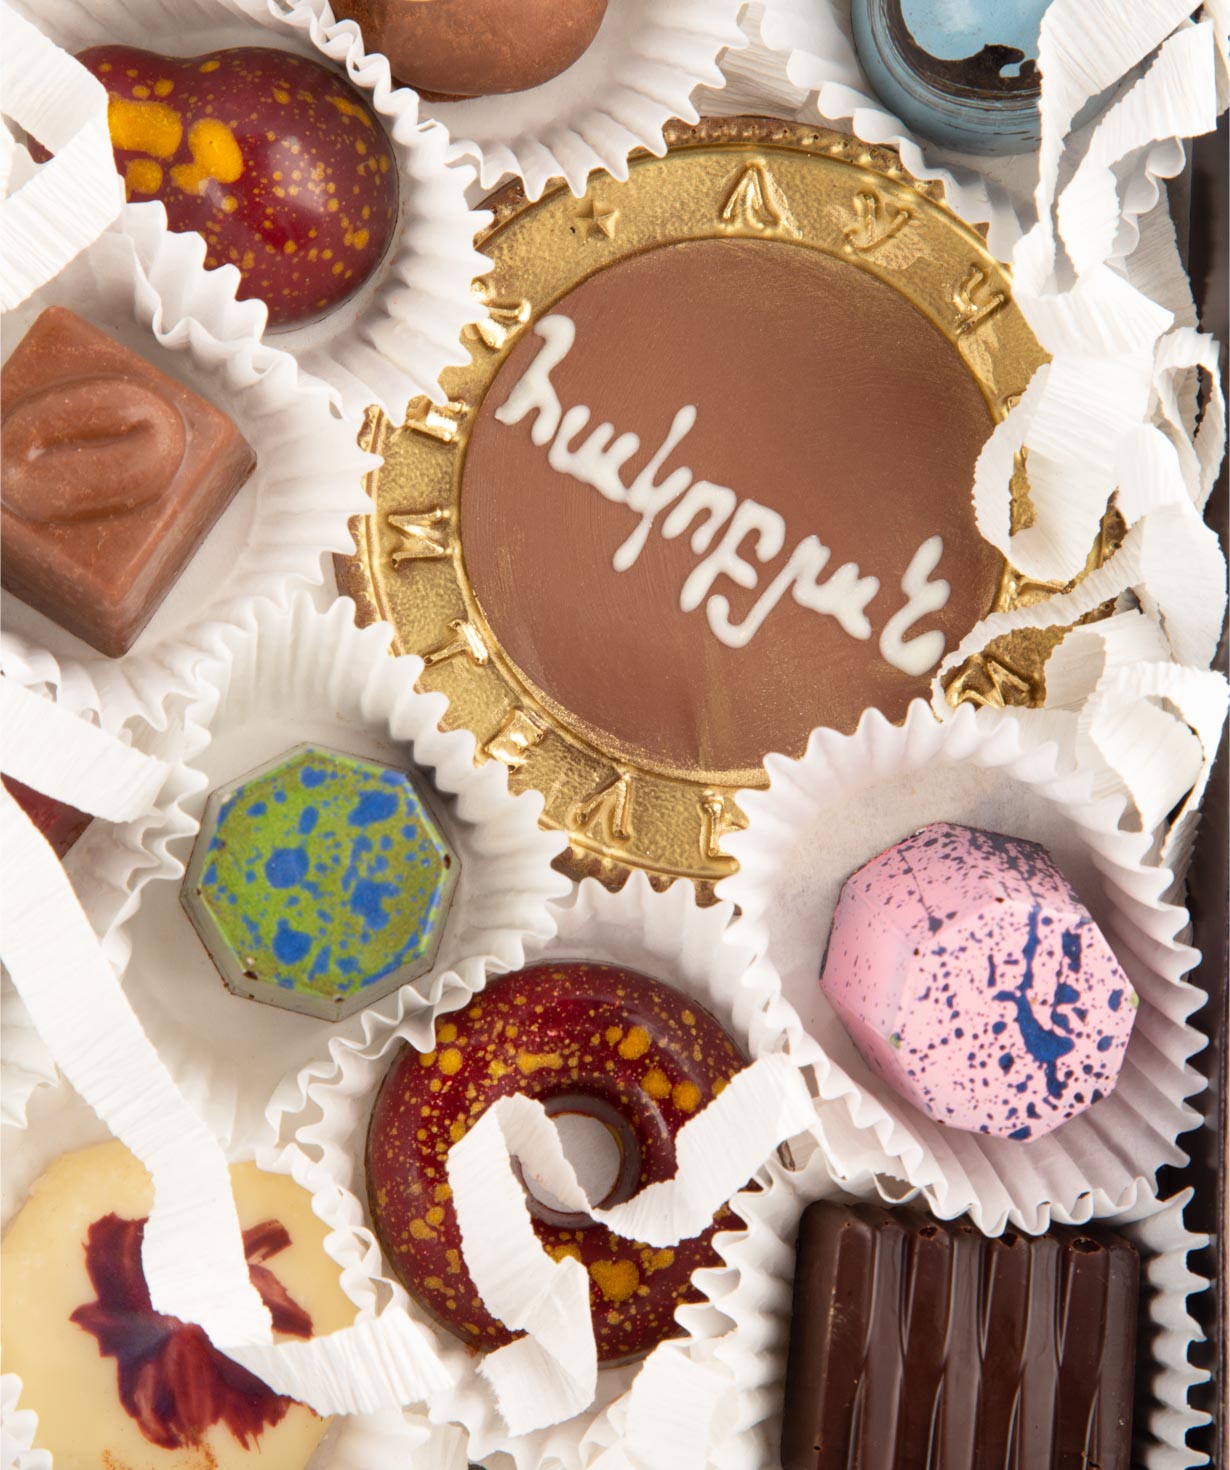 Chocolate collection `Lara Chocolate` №9